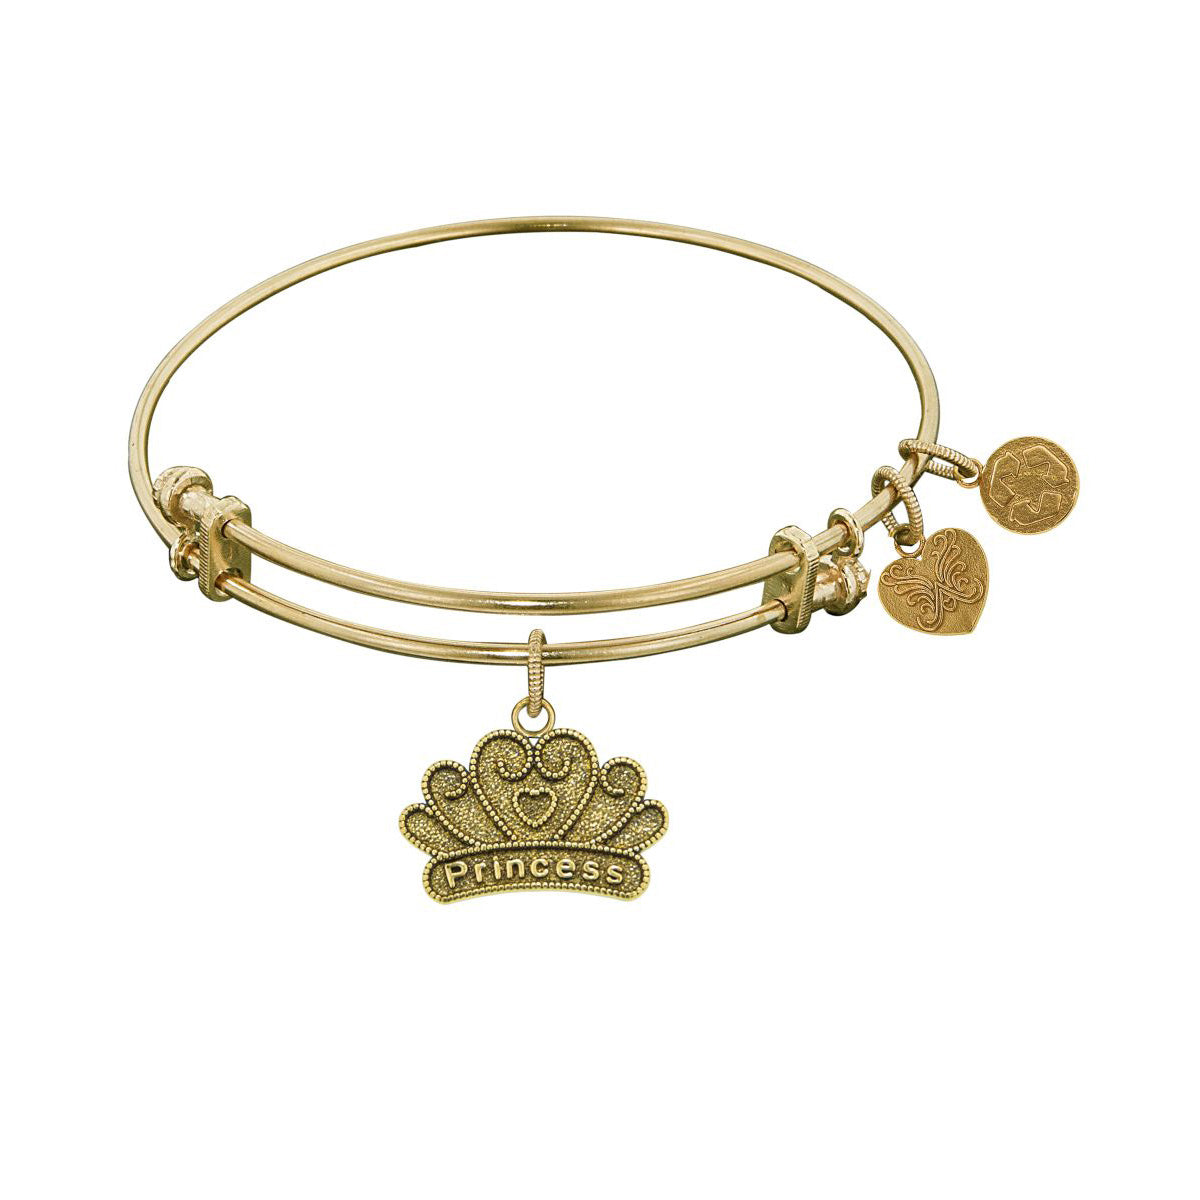 Stipple Finish Brass Princess Angelica Bangle Bracelet, 7.25" fine designer jewelry for men and women